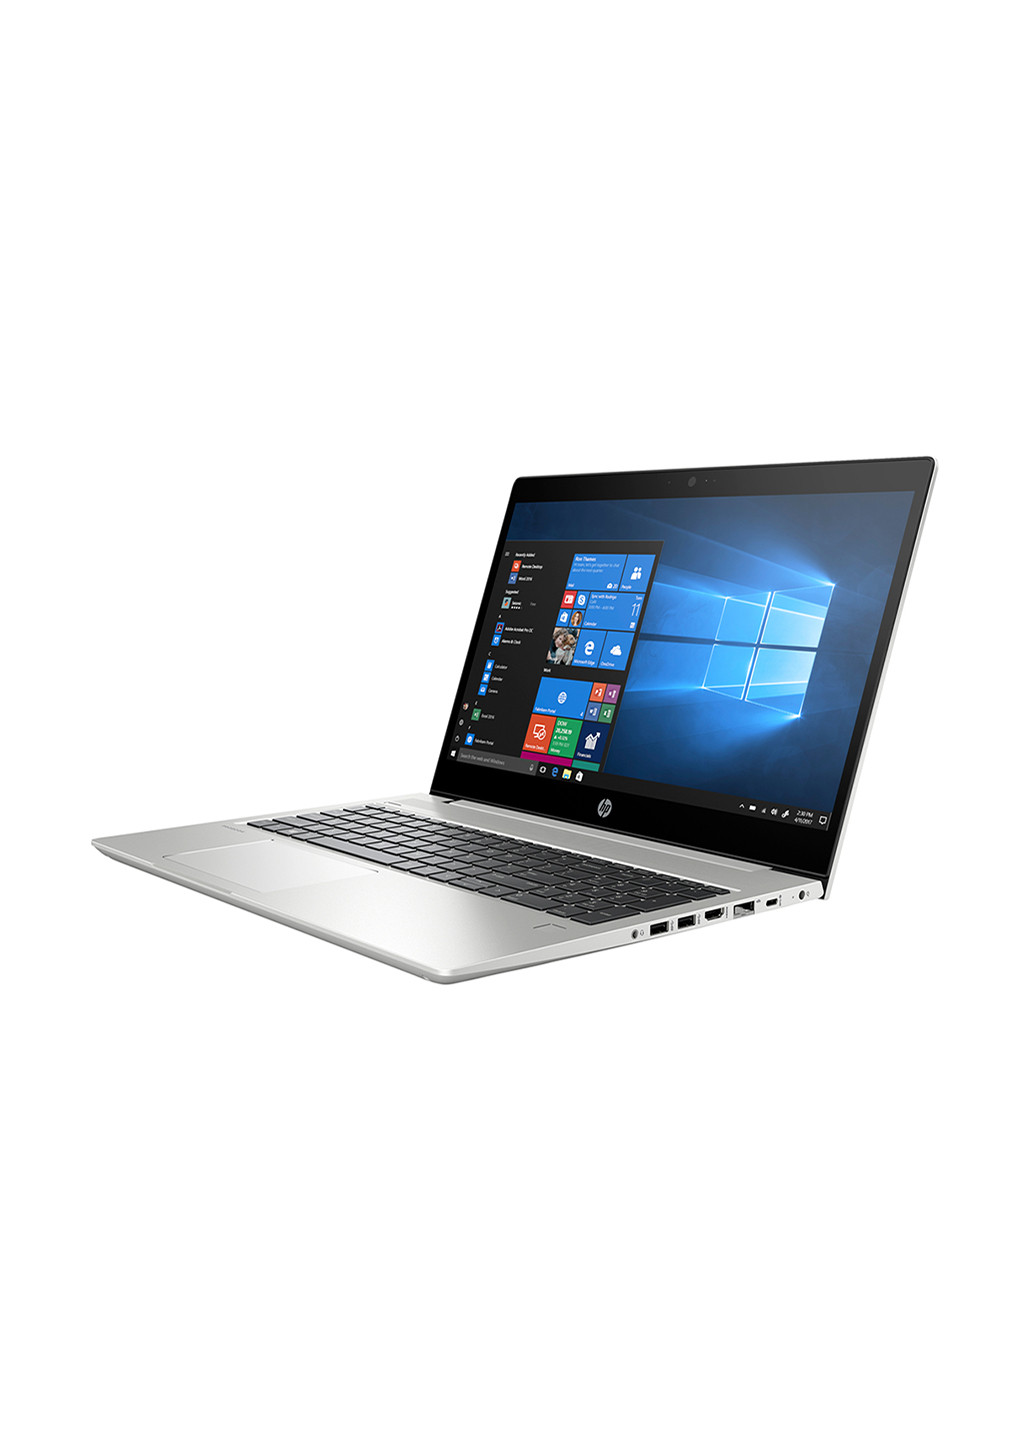 Ноутбук HP probook 450 g6 (6hl94ea) silver (136402384)